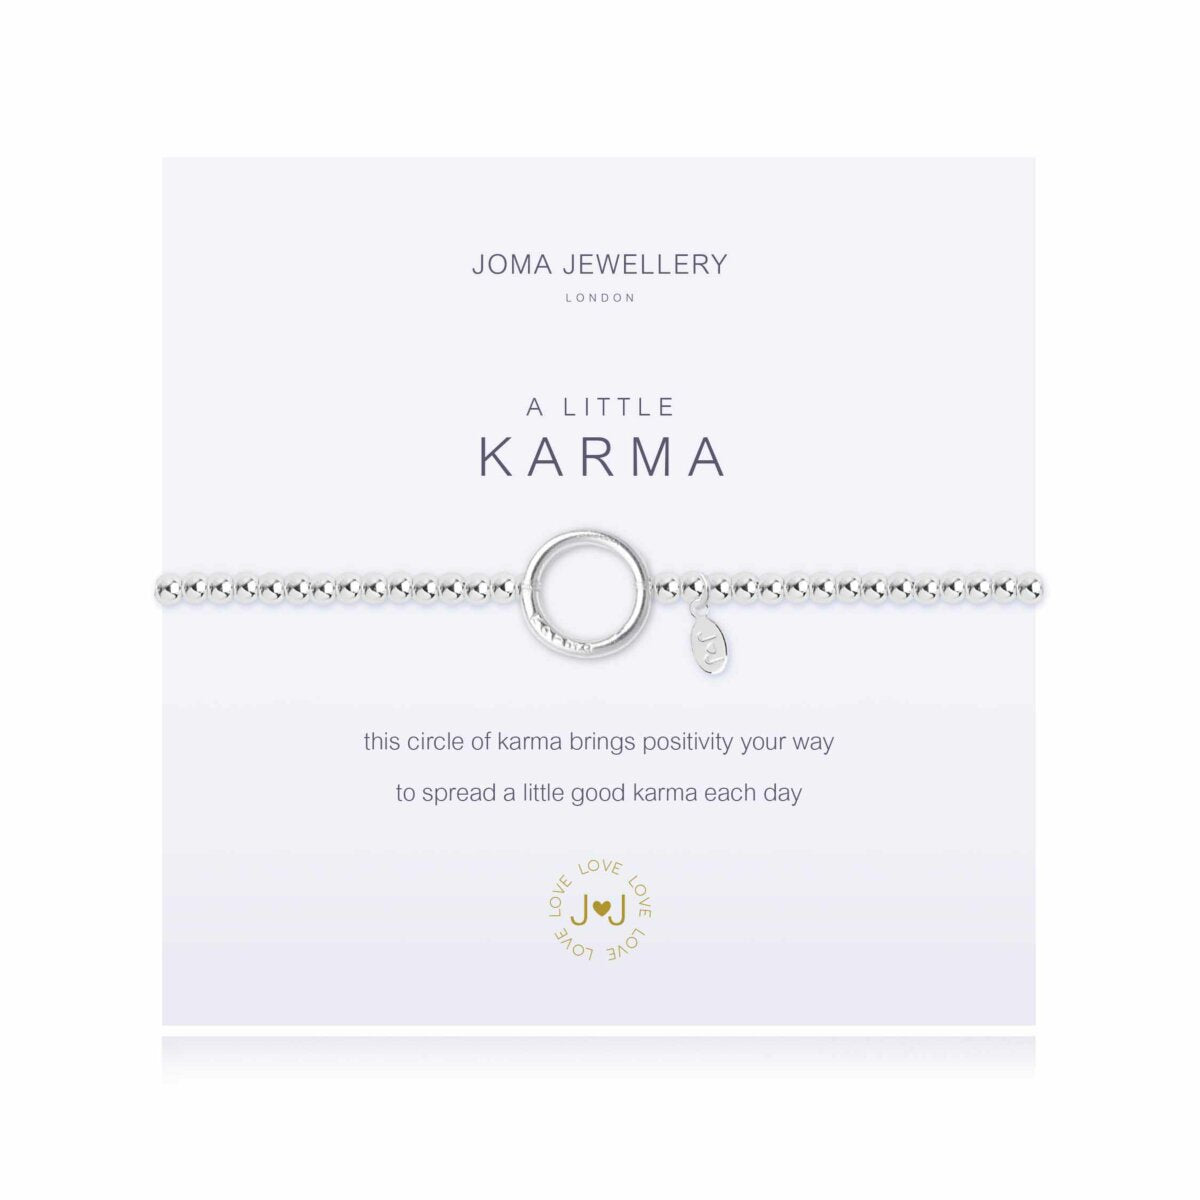 Joma Jewellery 'A Little' Karma